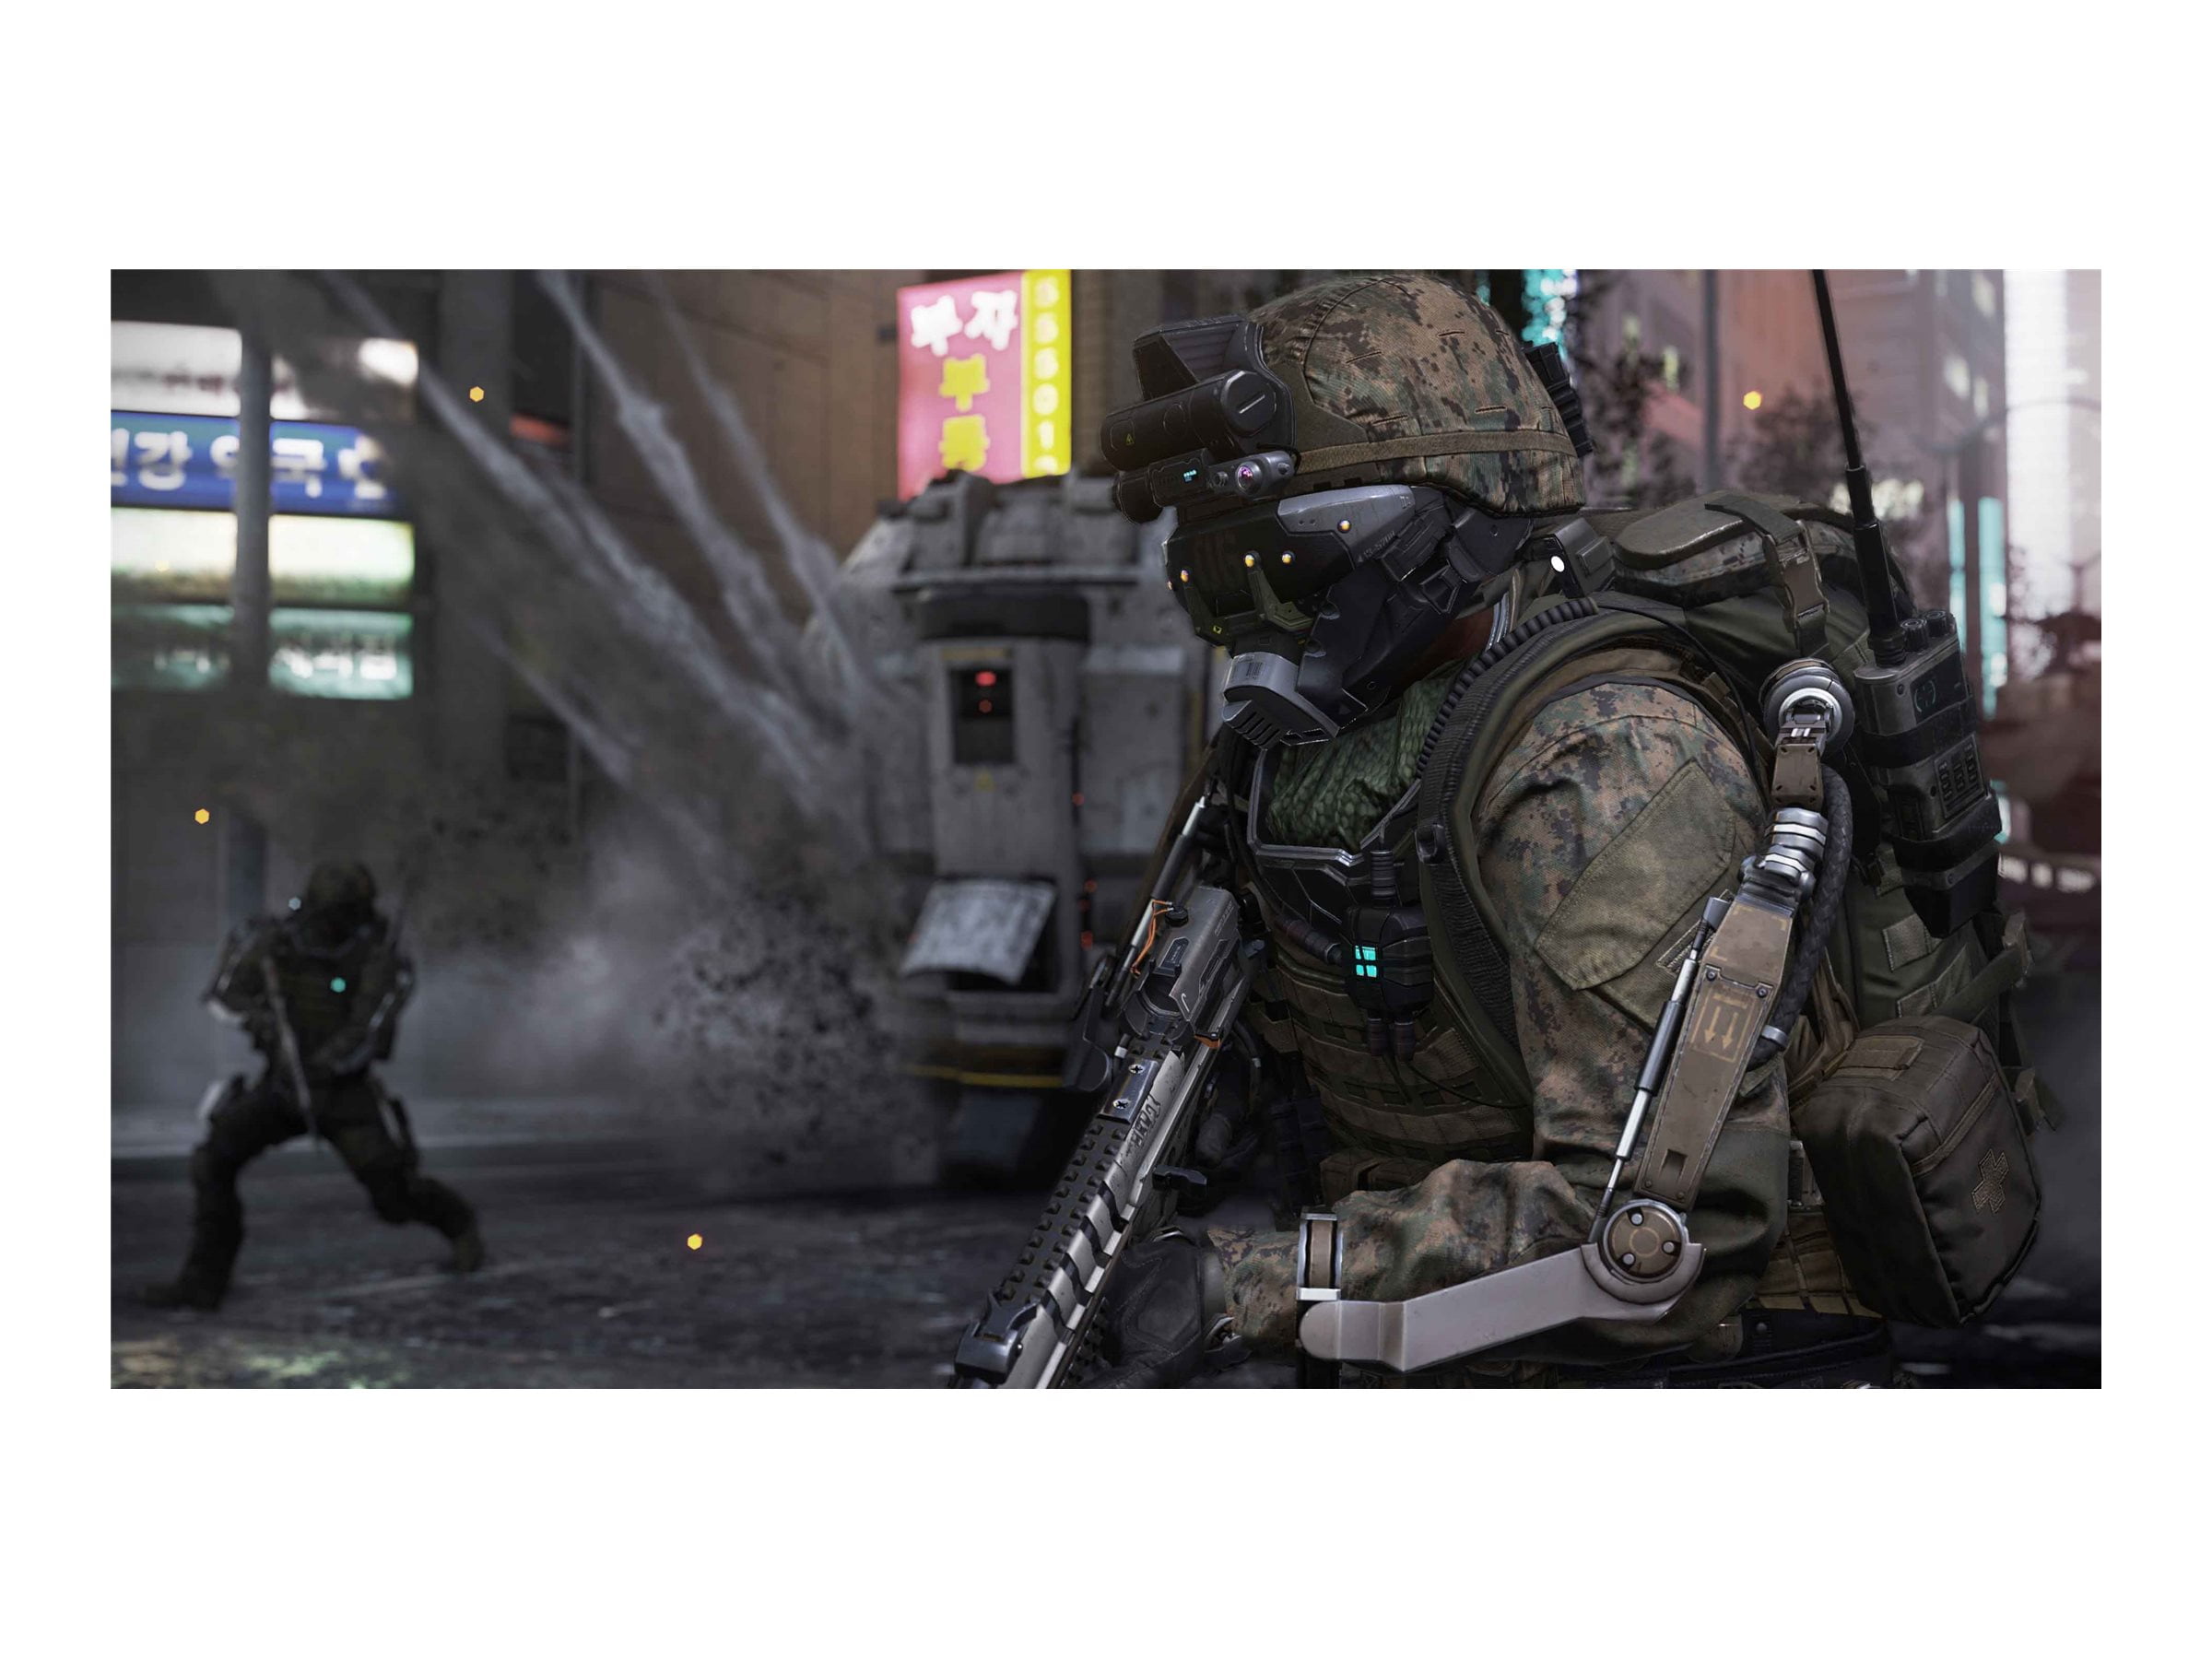 Jogo Xbox One Call Of Duty Advanced Warfare (Day Zero Edition)